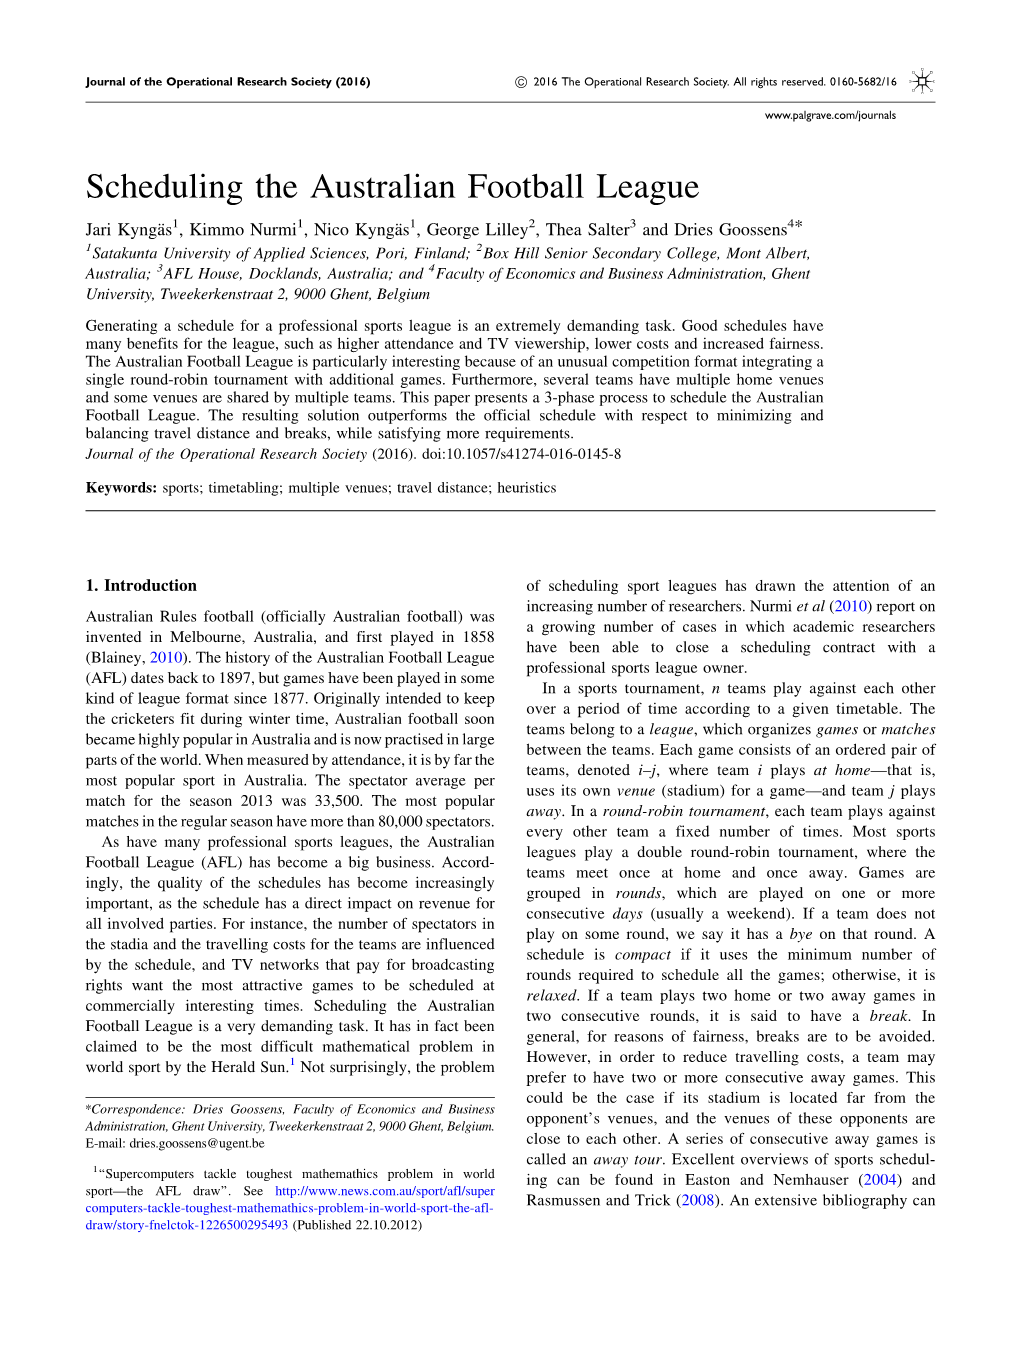 Scheduling the Australian Football League